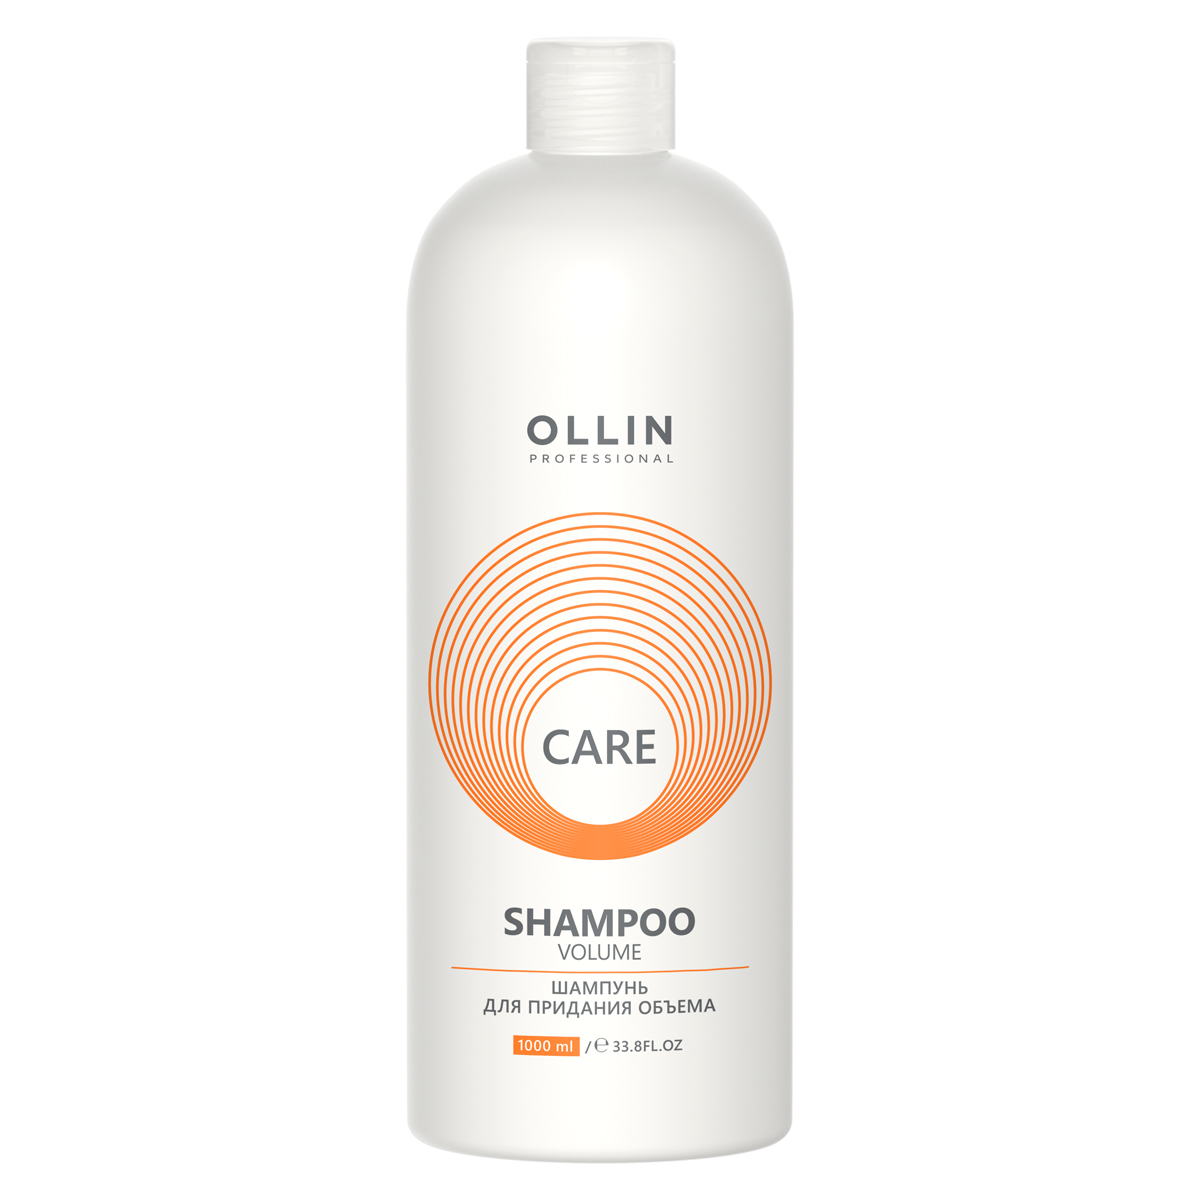 Ollin Professional Шампунь для придания объема, 1000 мл (Ollin Professional, Care)